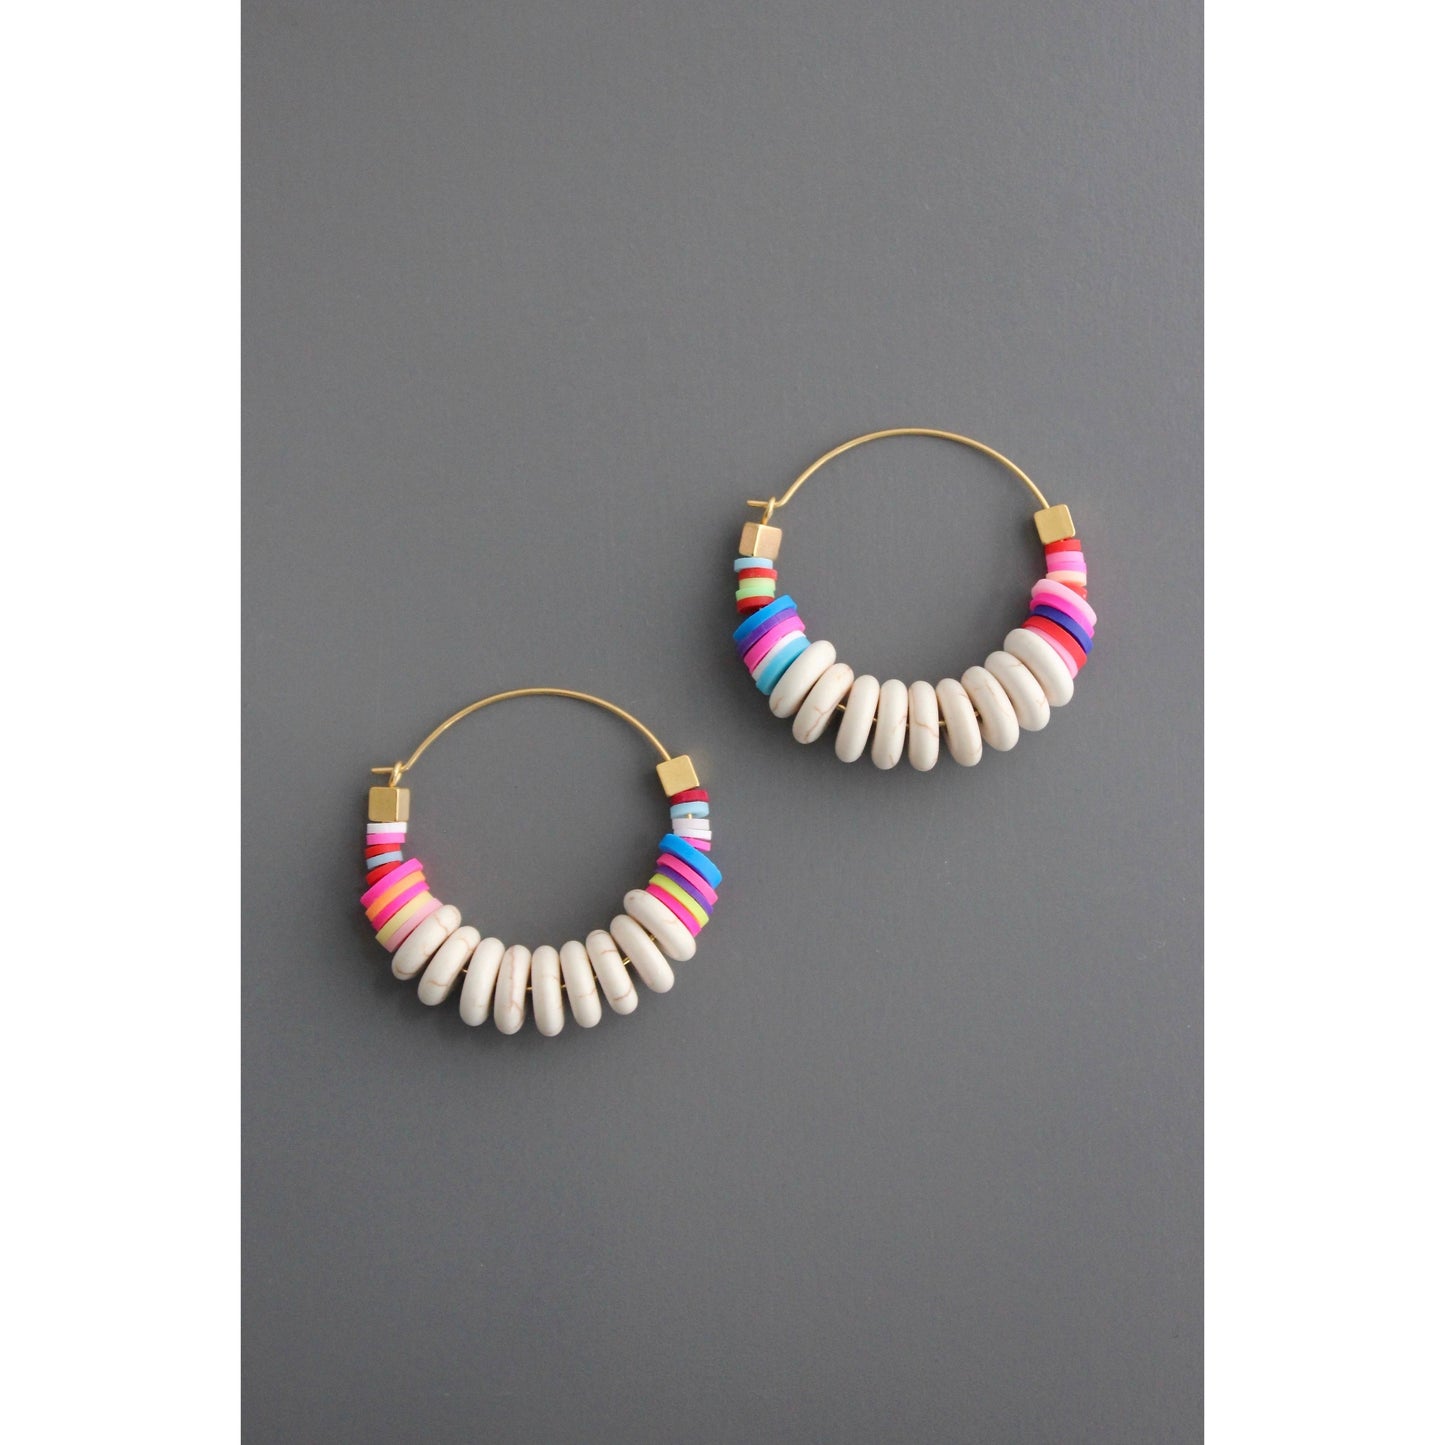 David Aubrey Jewelry - EMIE13 White and rainbow hoop earrings